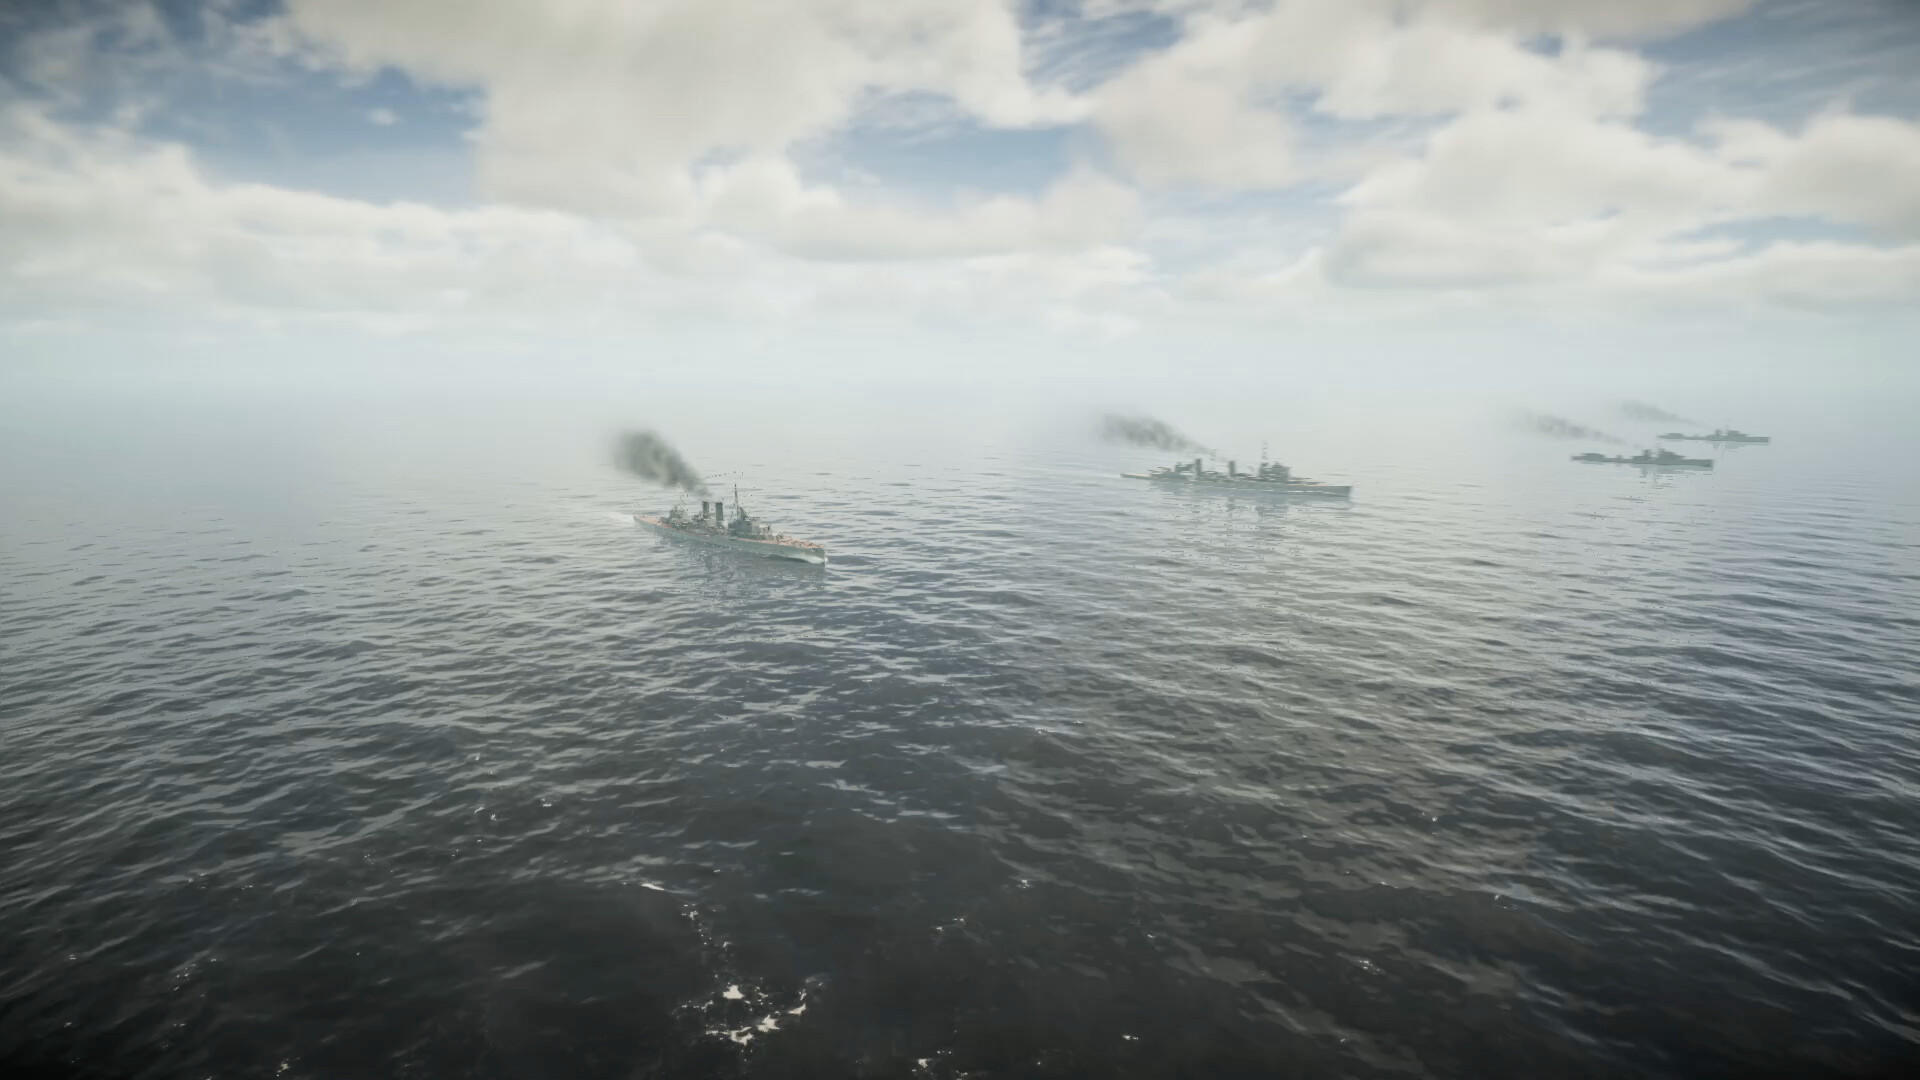 Victory at Sea Atlantic - World War II Naval Warfare screenshot game